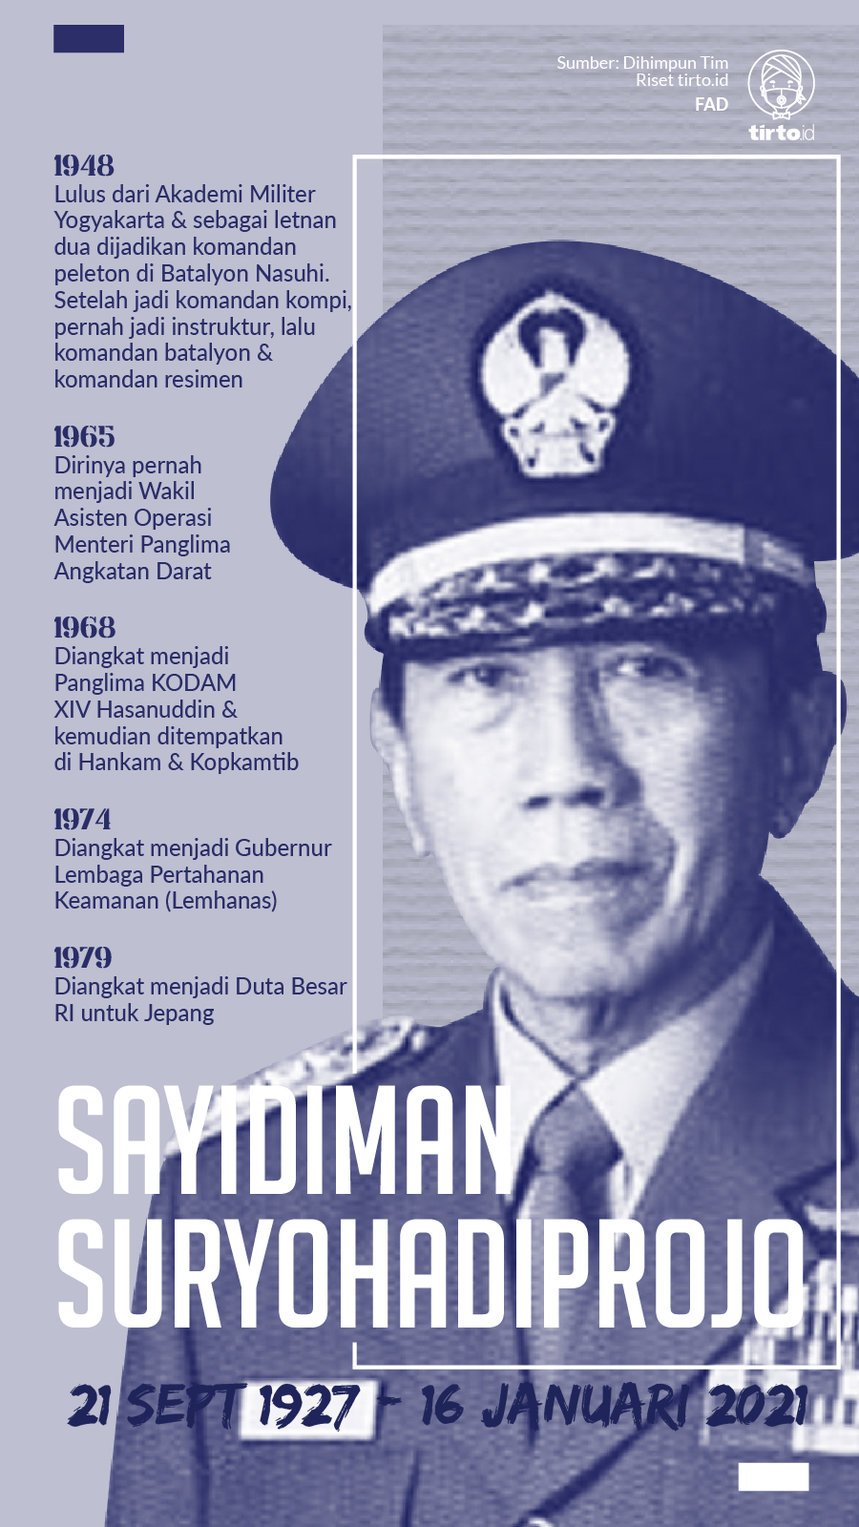 Infografik Sayidiman Suryohadiprojo